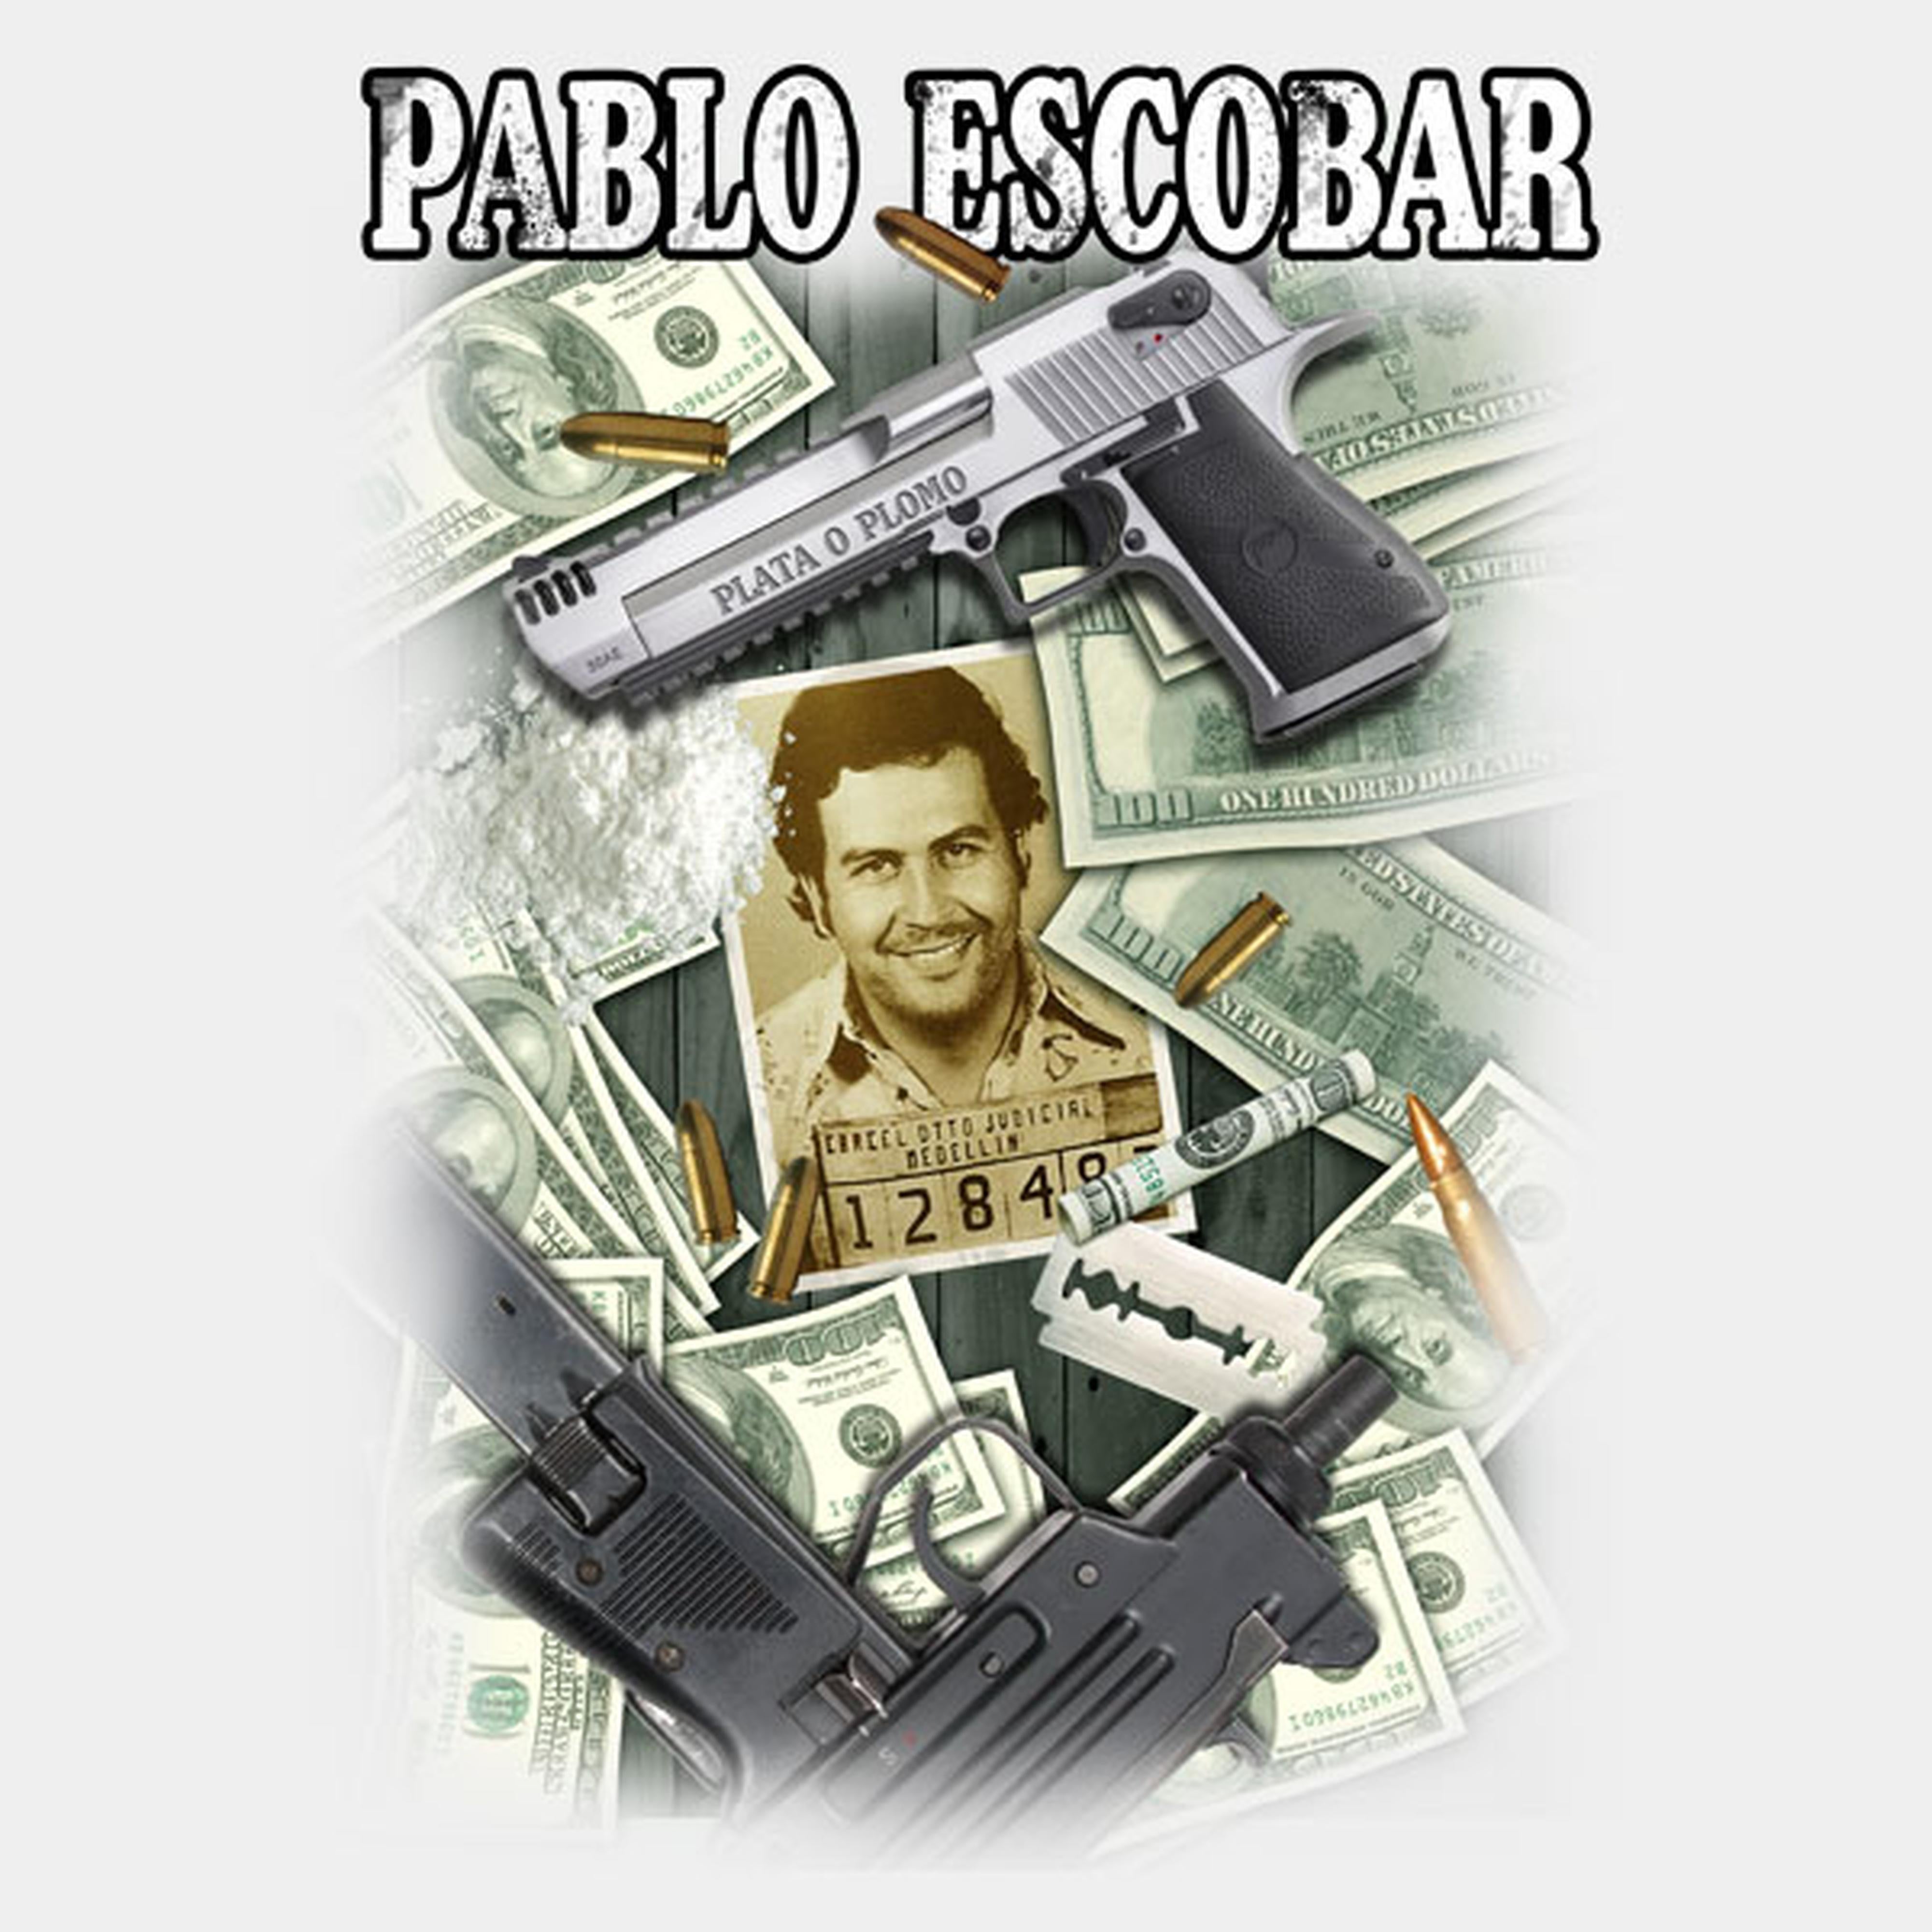 Pablo Escobar collage - T-shirt